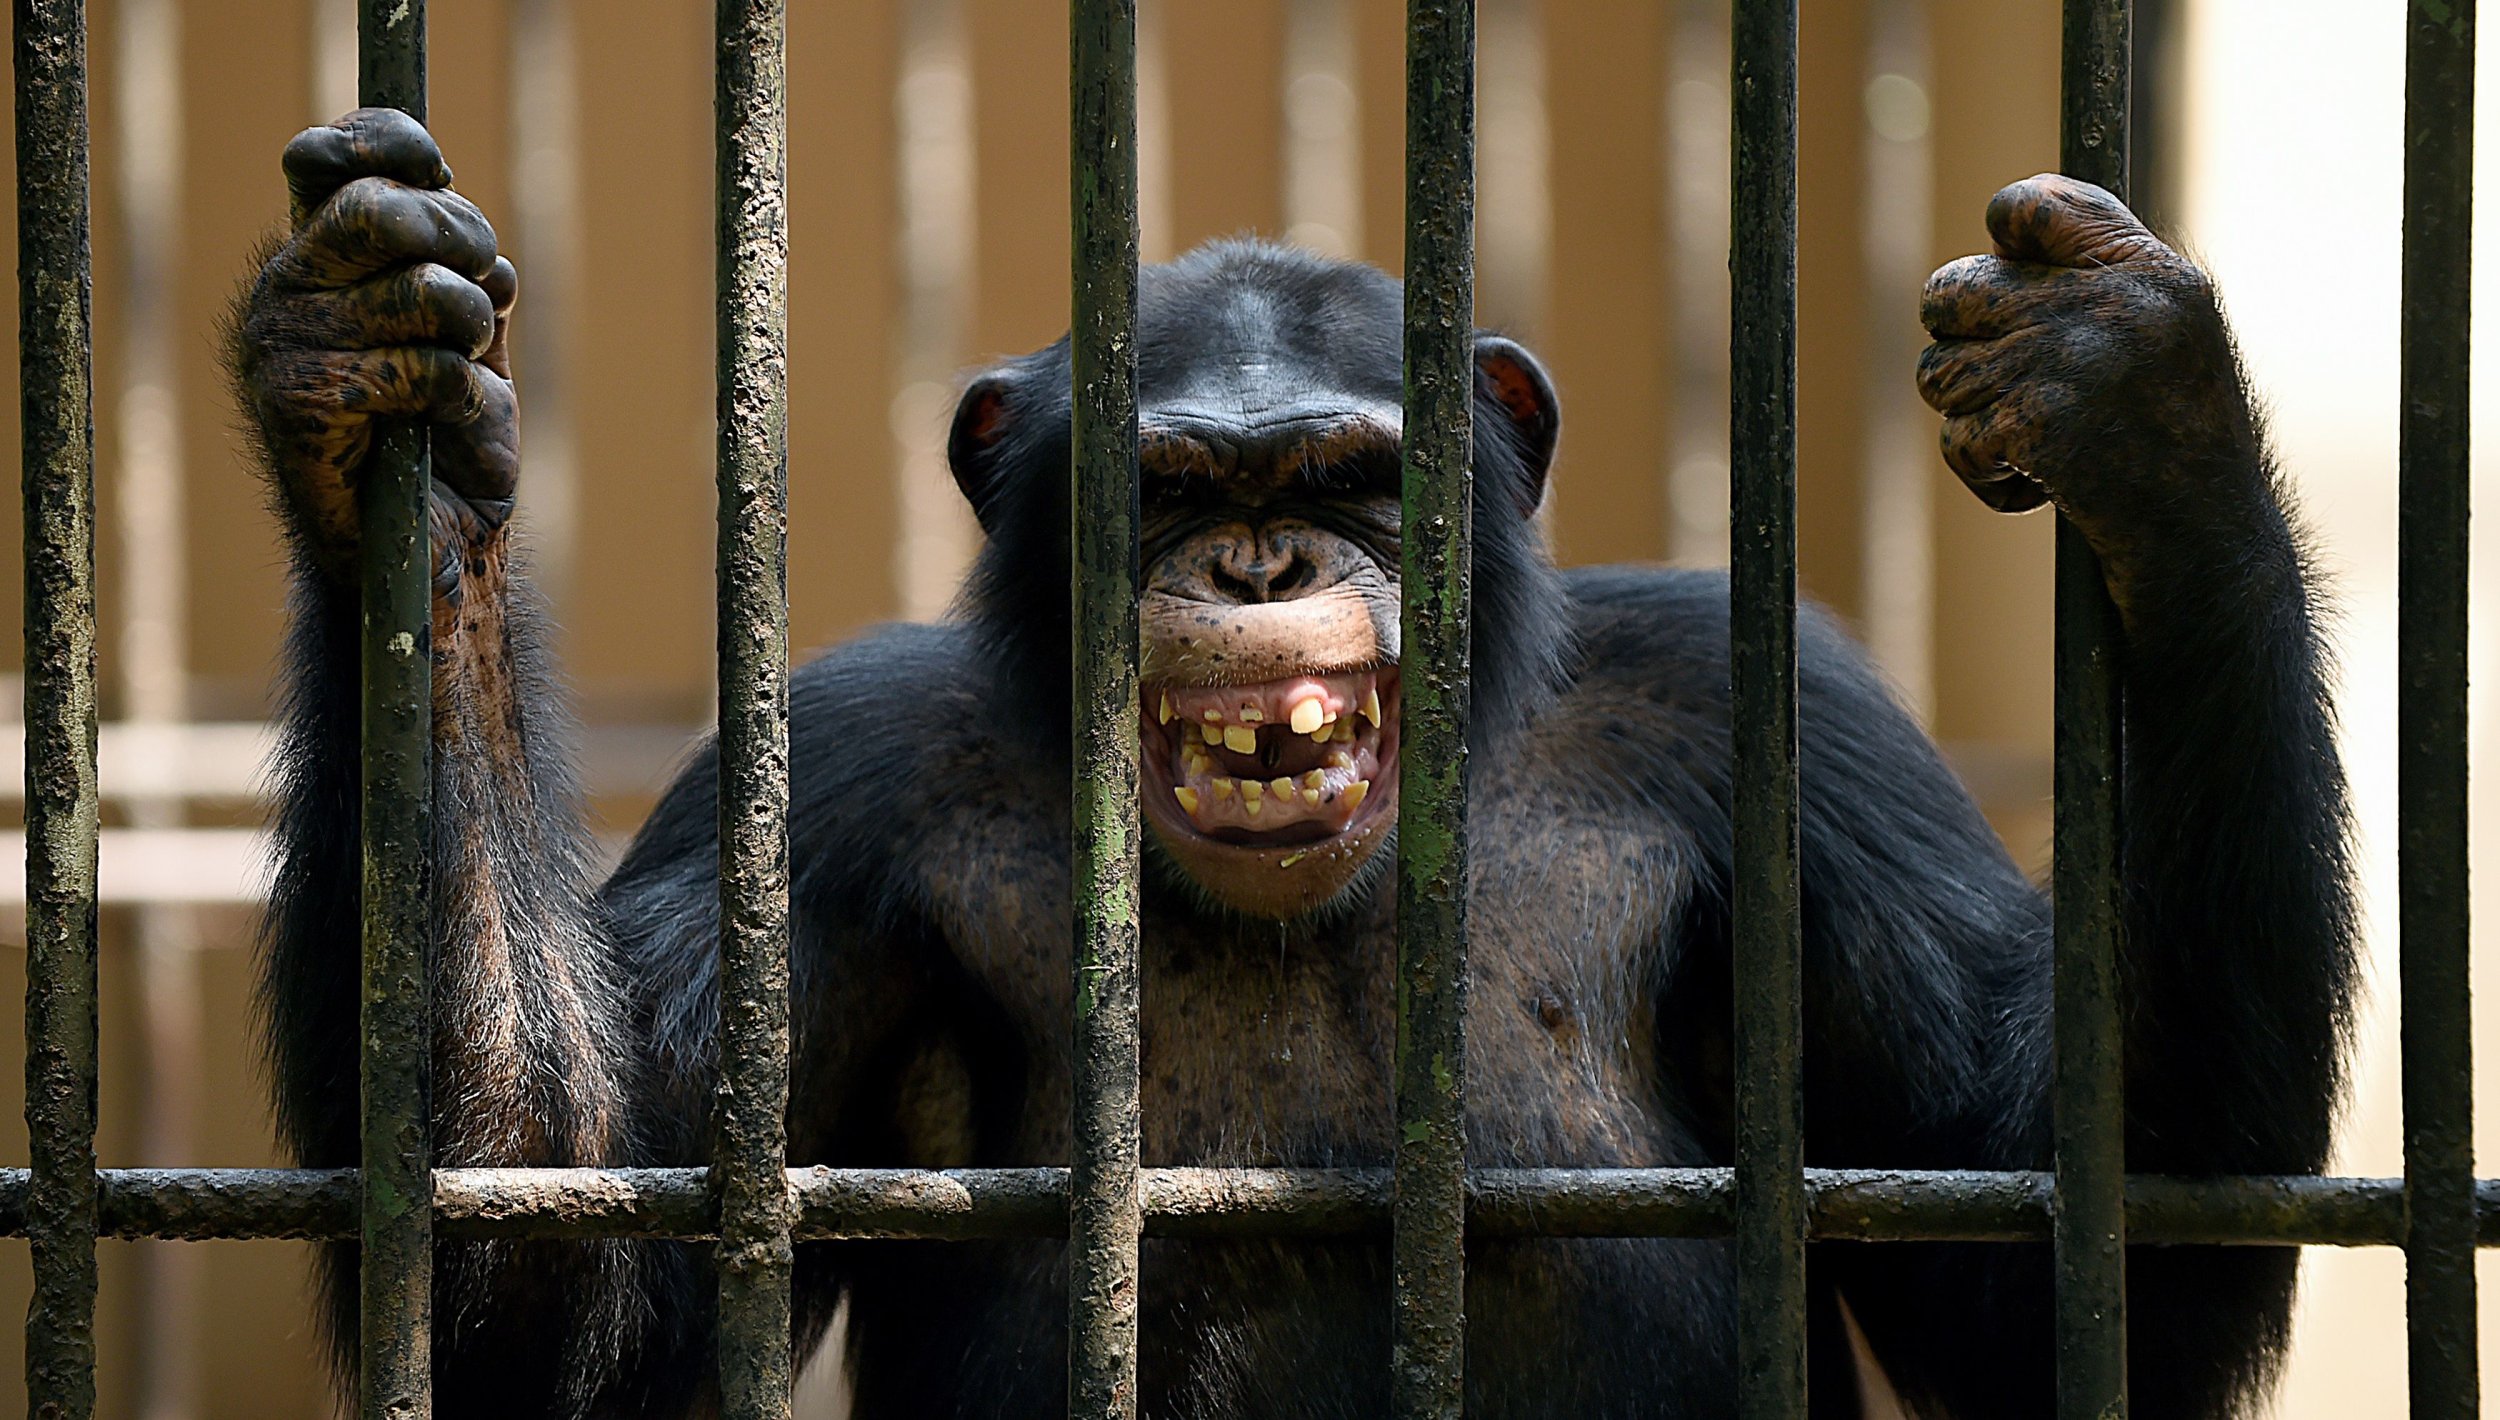 Chimp Zoo 